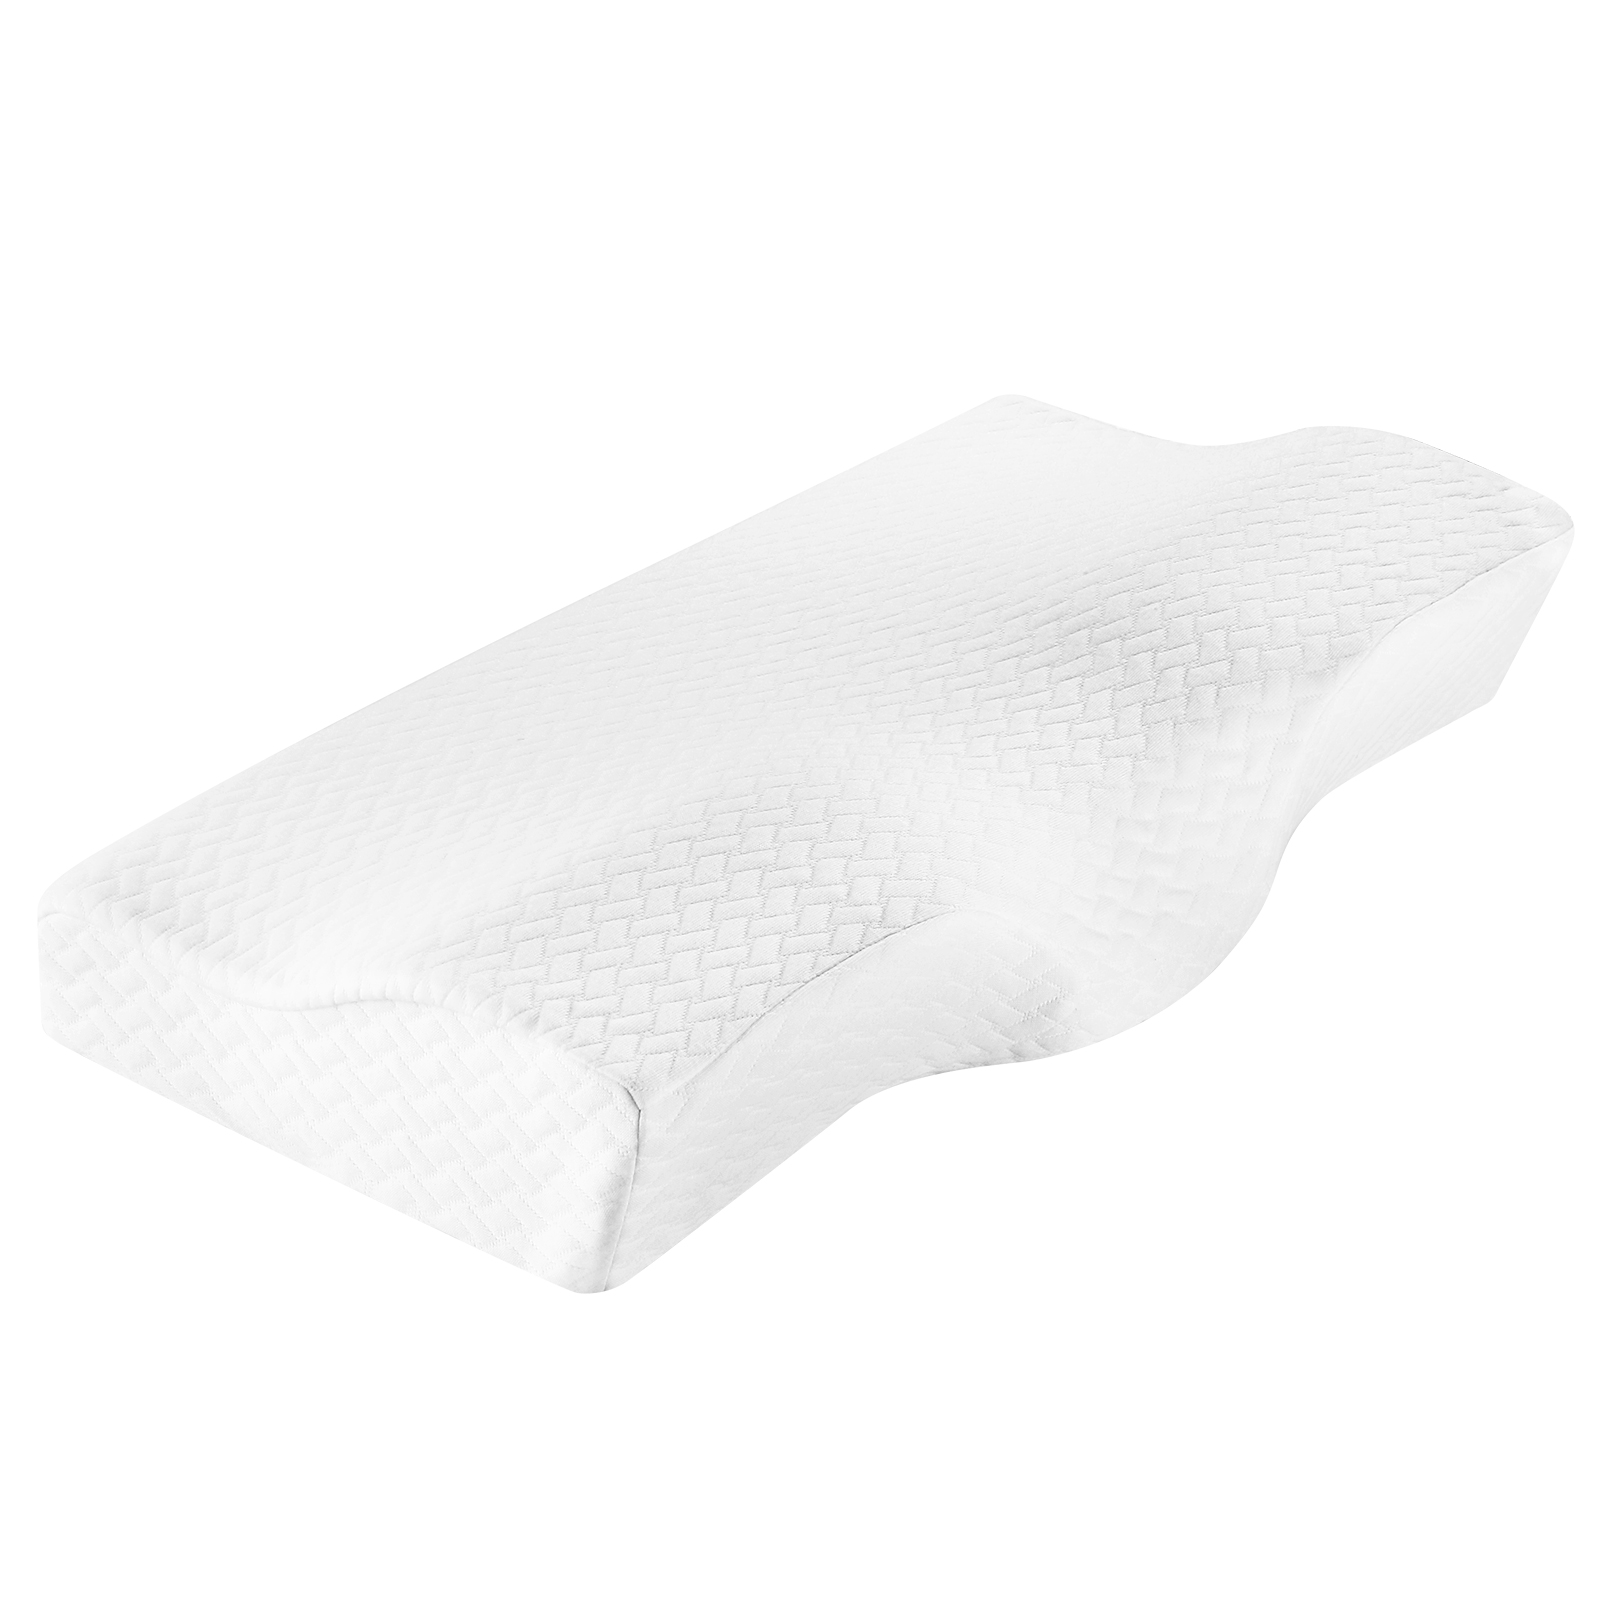 Luxdream Neck Support Memory Foam Pillow